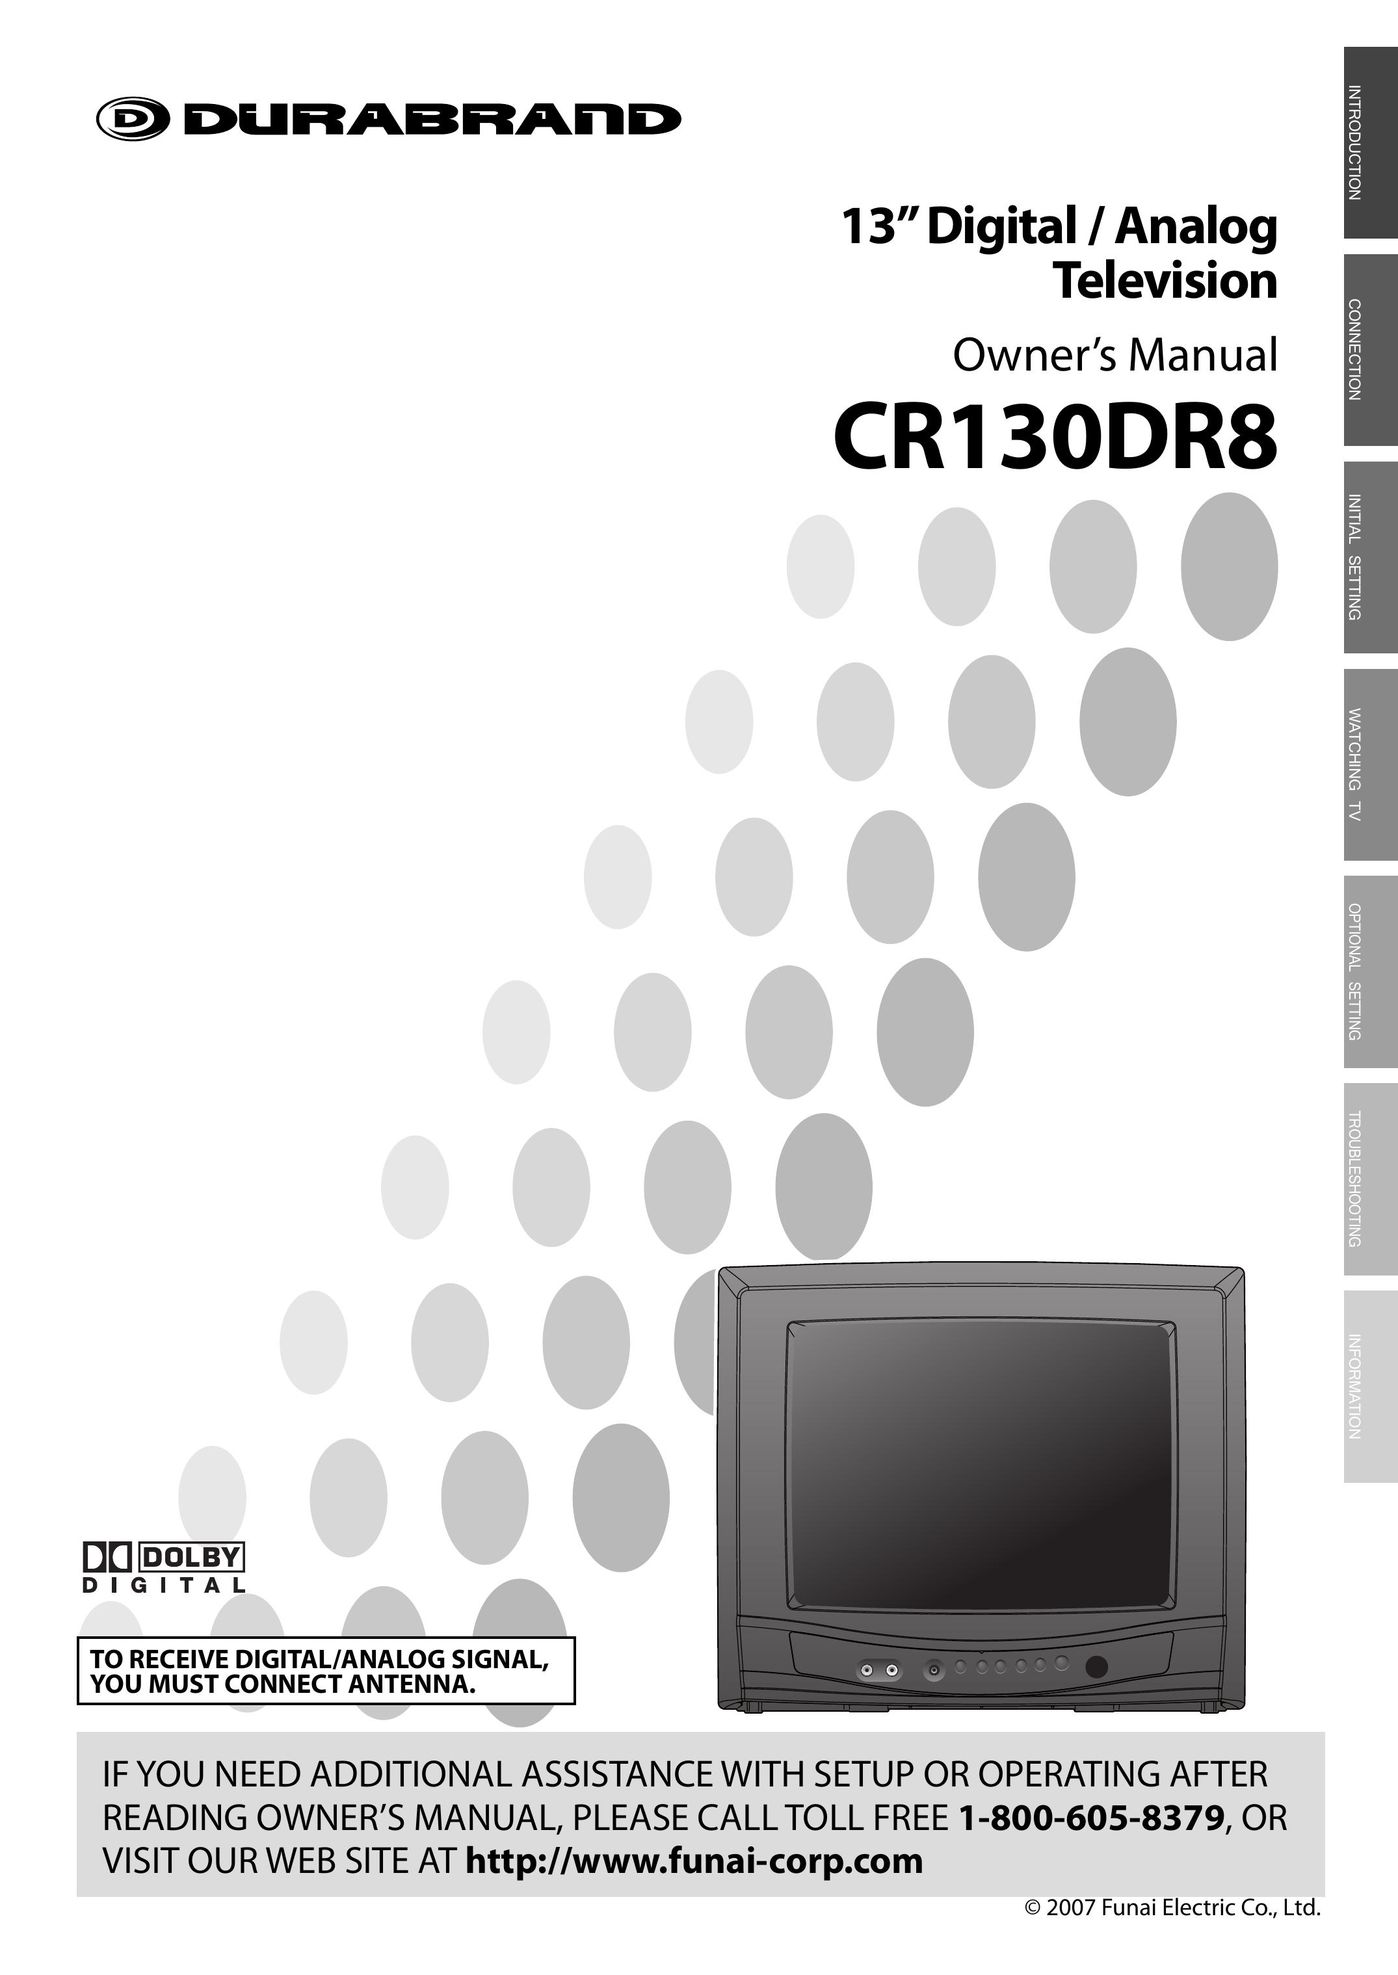 FUNAI CR130DR8 CRT Television User Manual (Page 1)